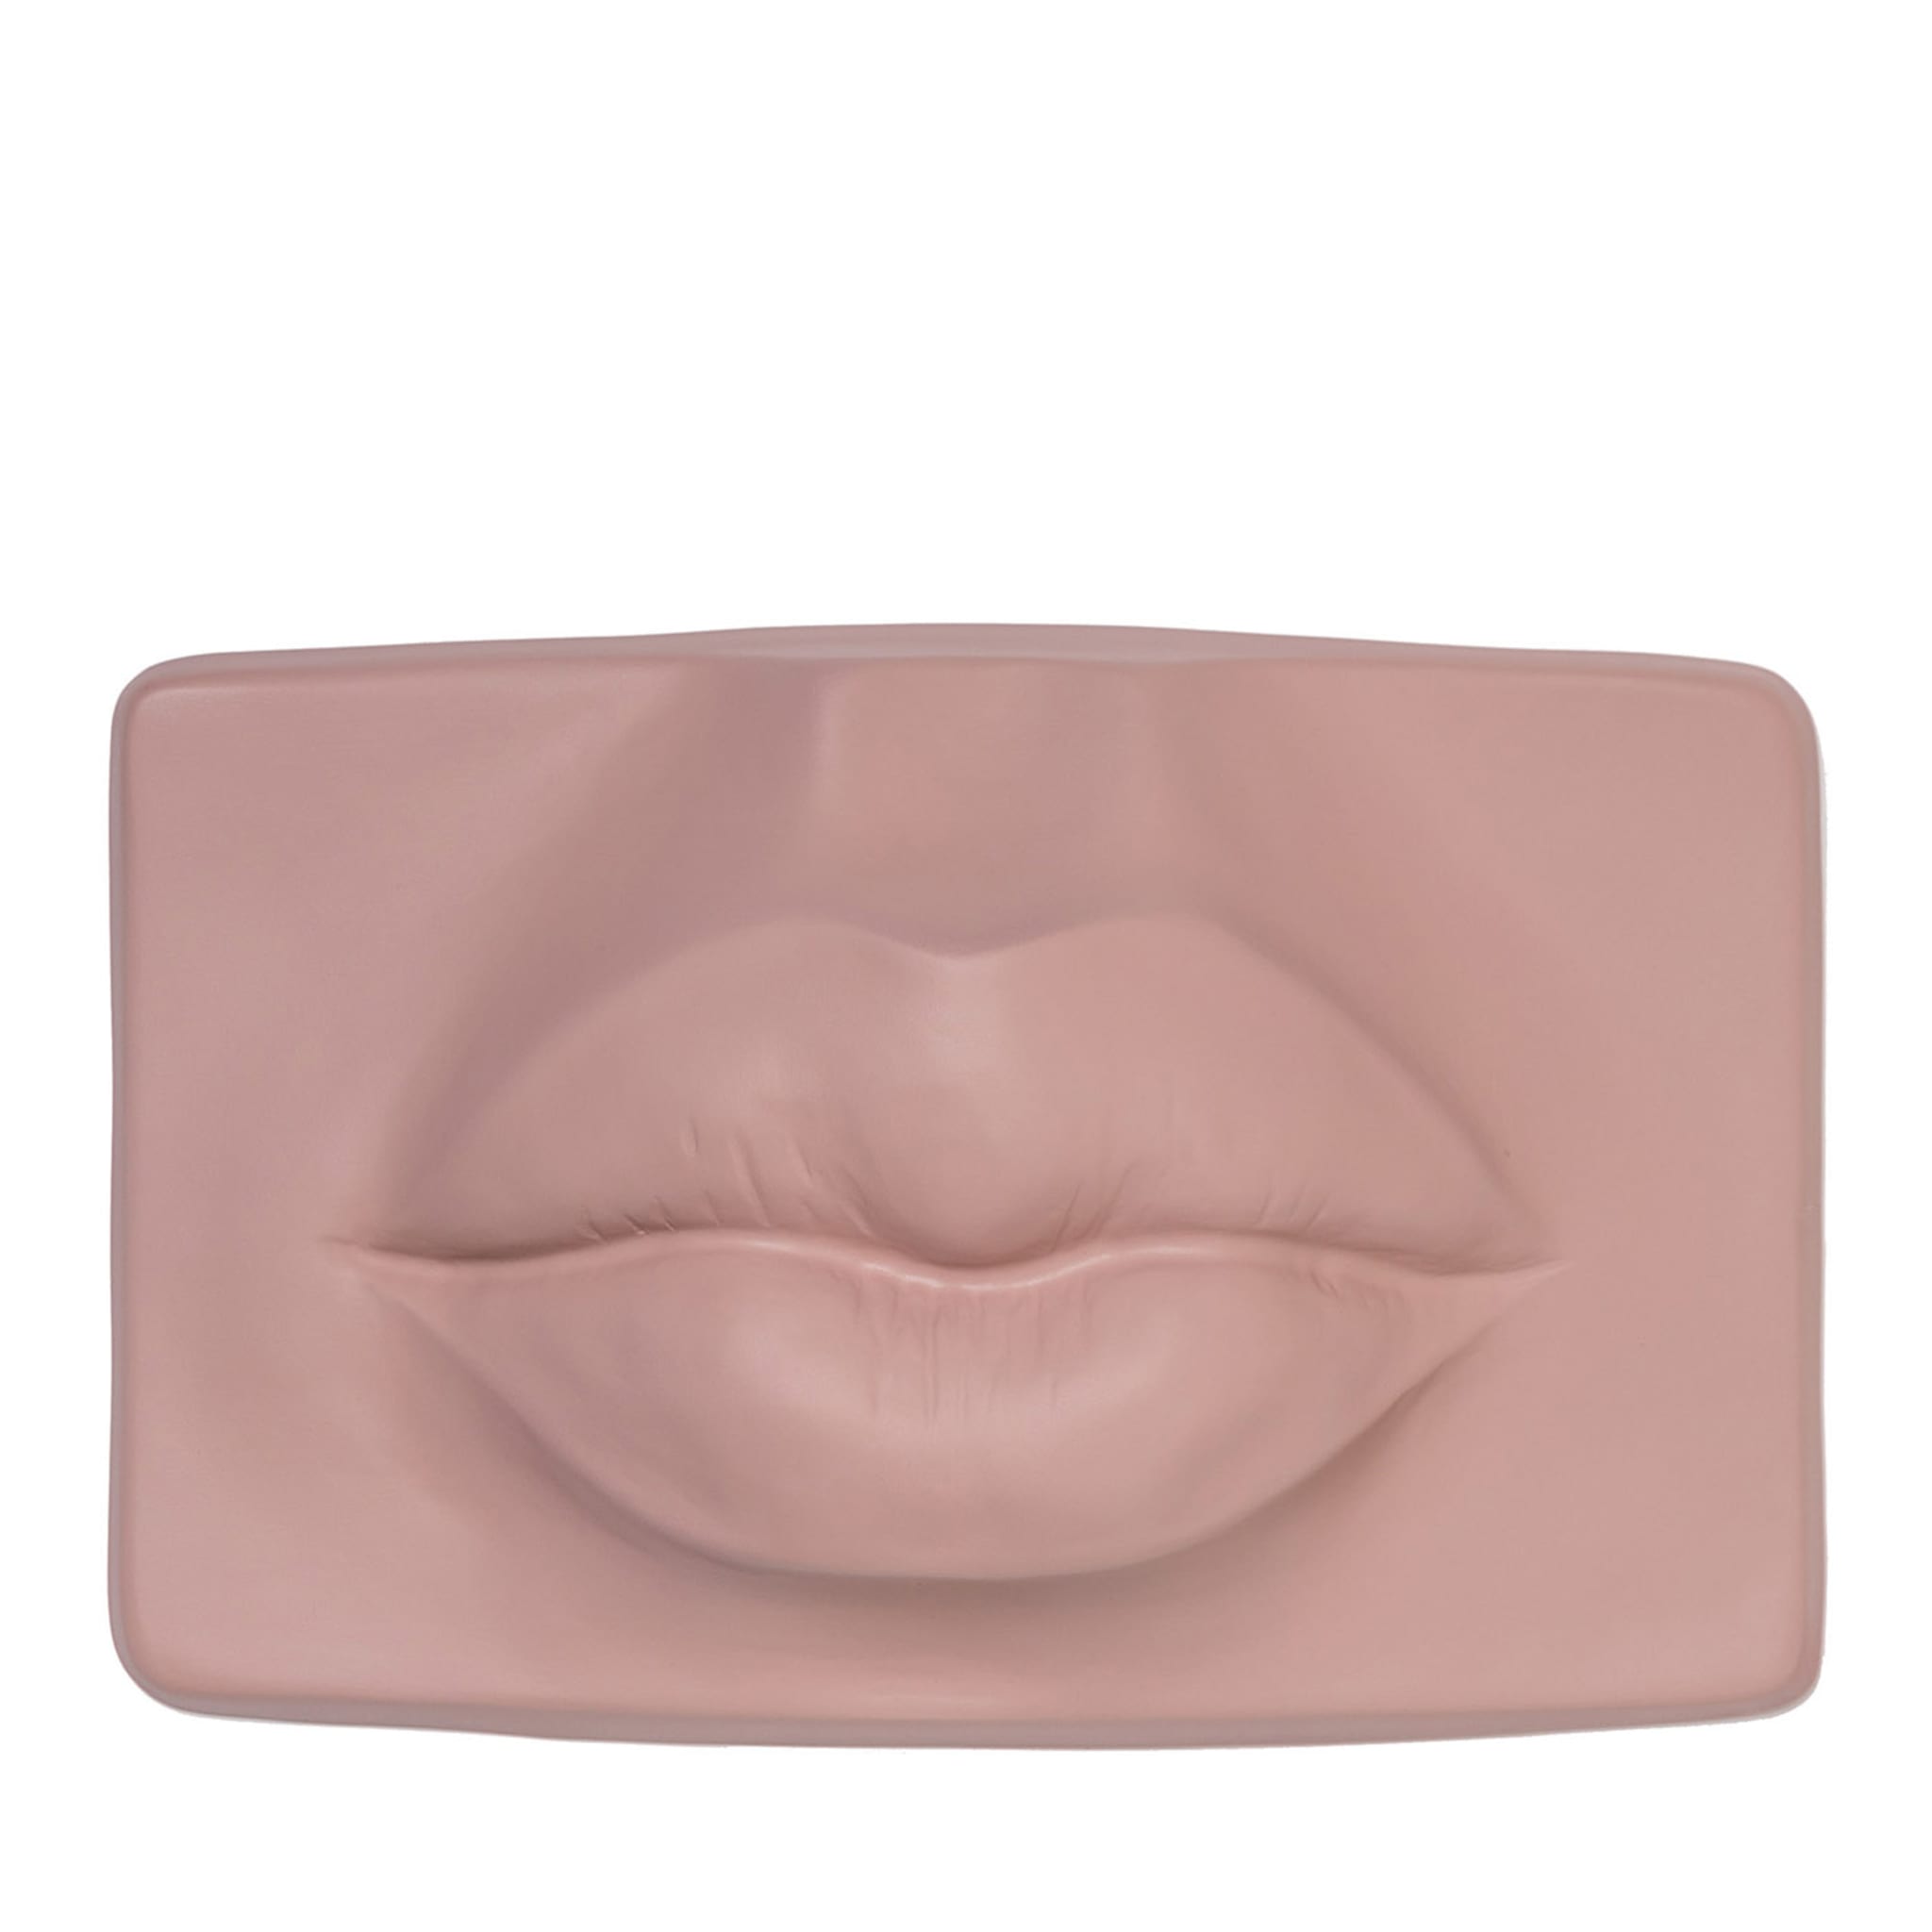 Lippen Jolie Rosa Skulptur - Hauptansicht